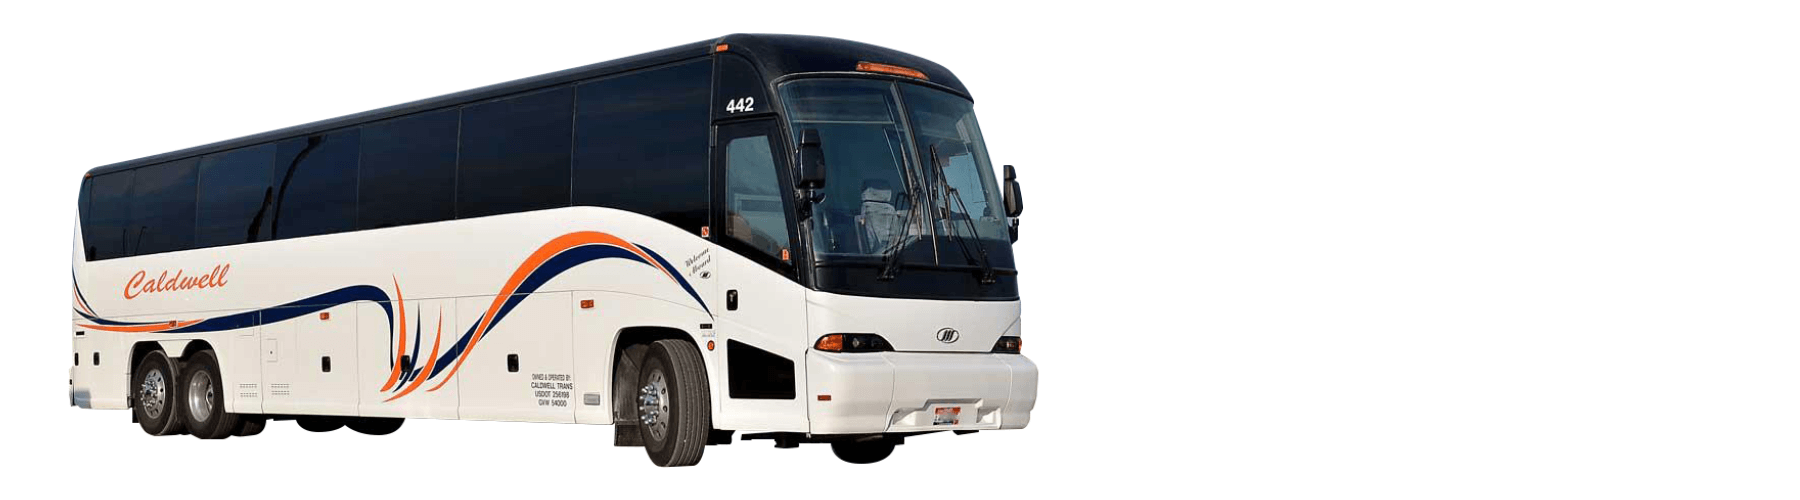 Caldwell Transportation Bus